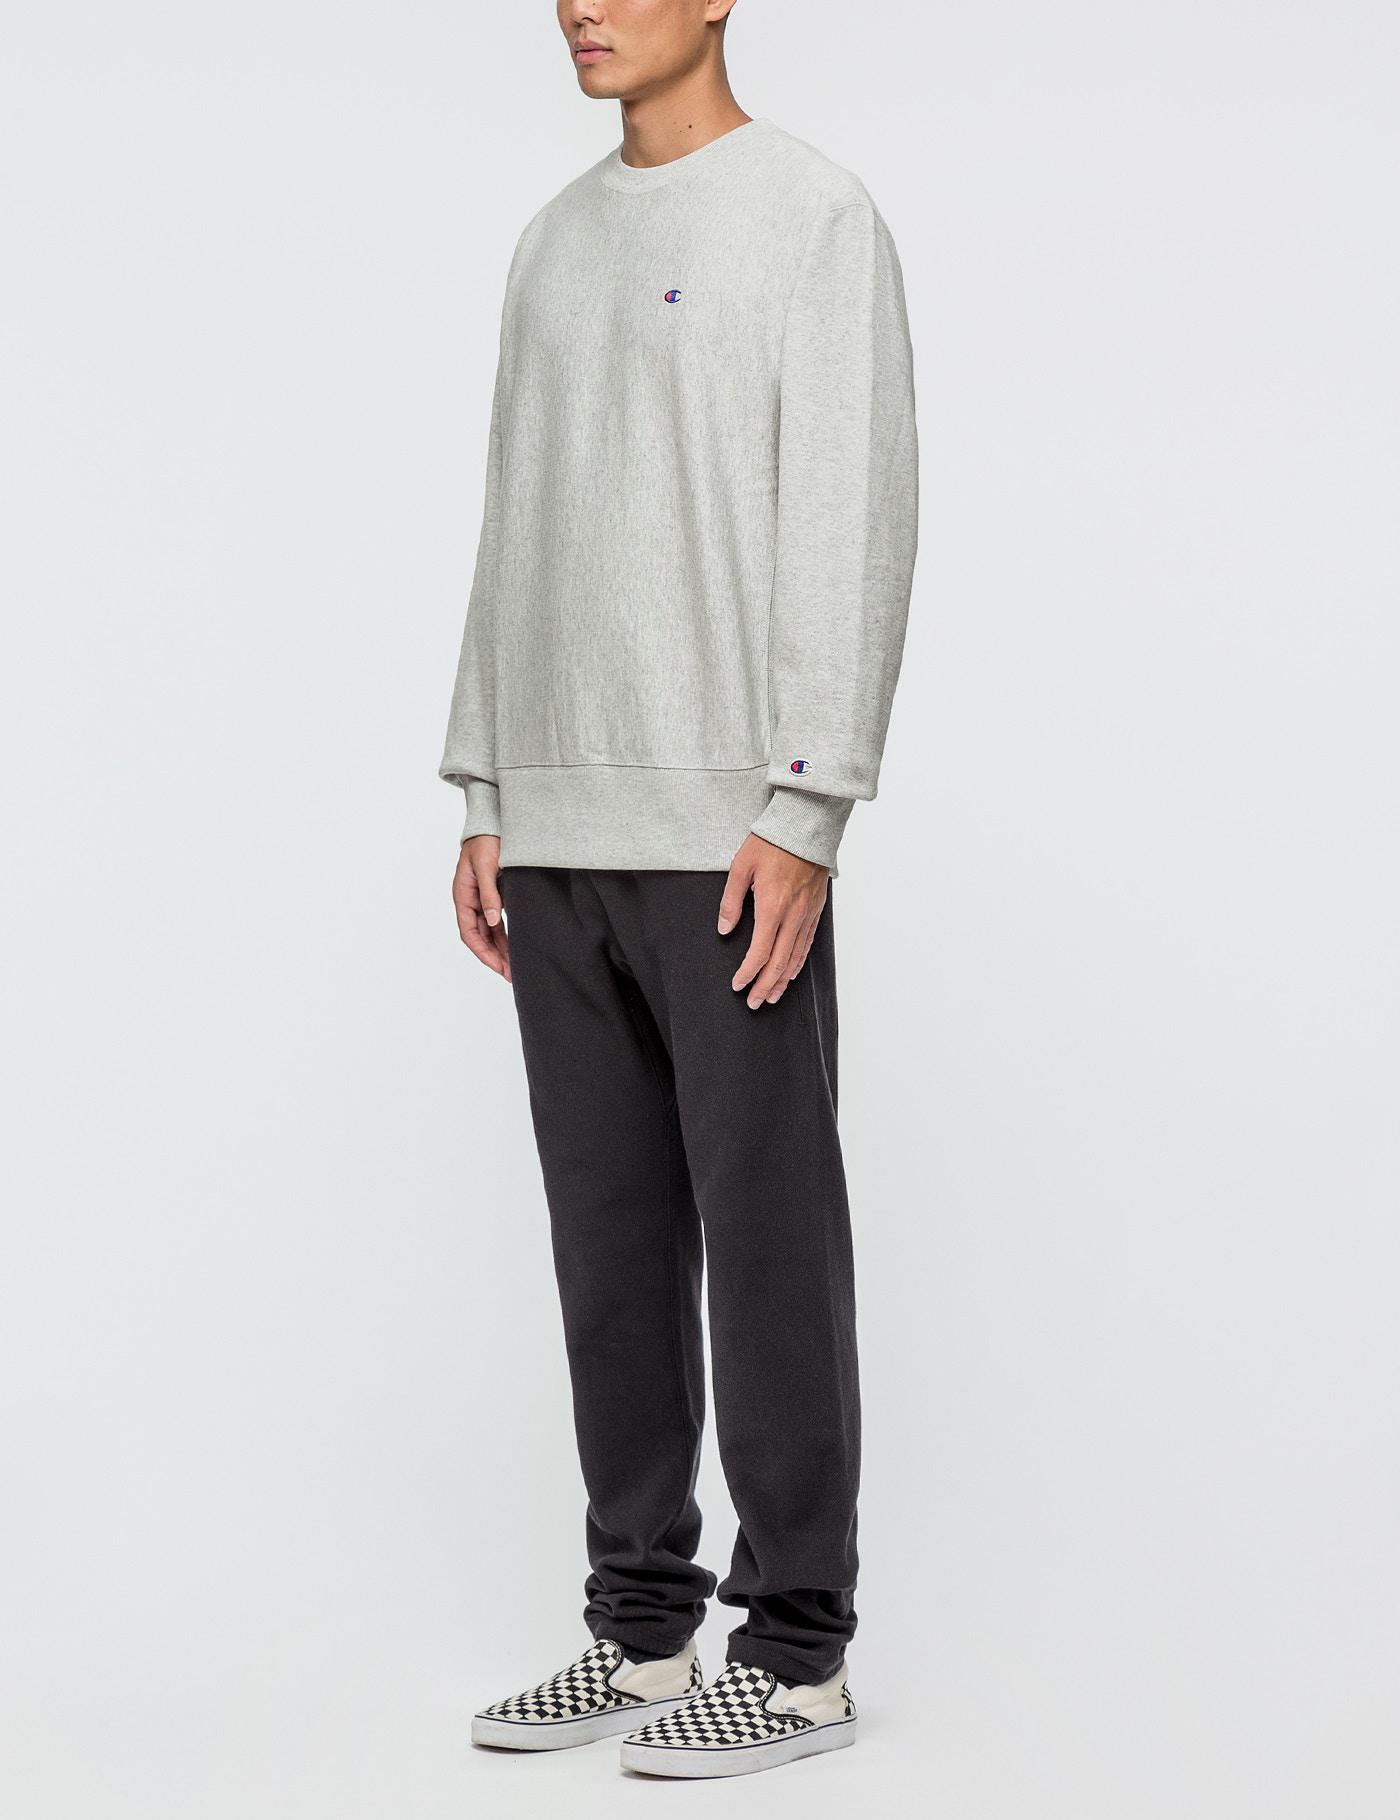 Champion Cotton Small Logo Sweatshirt in Grey (Gray) for Men - Lyst